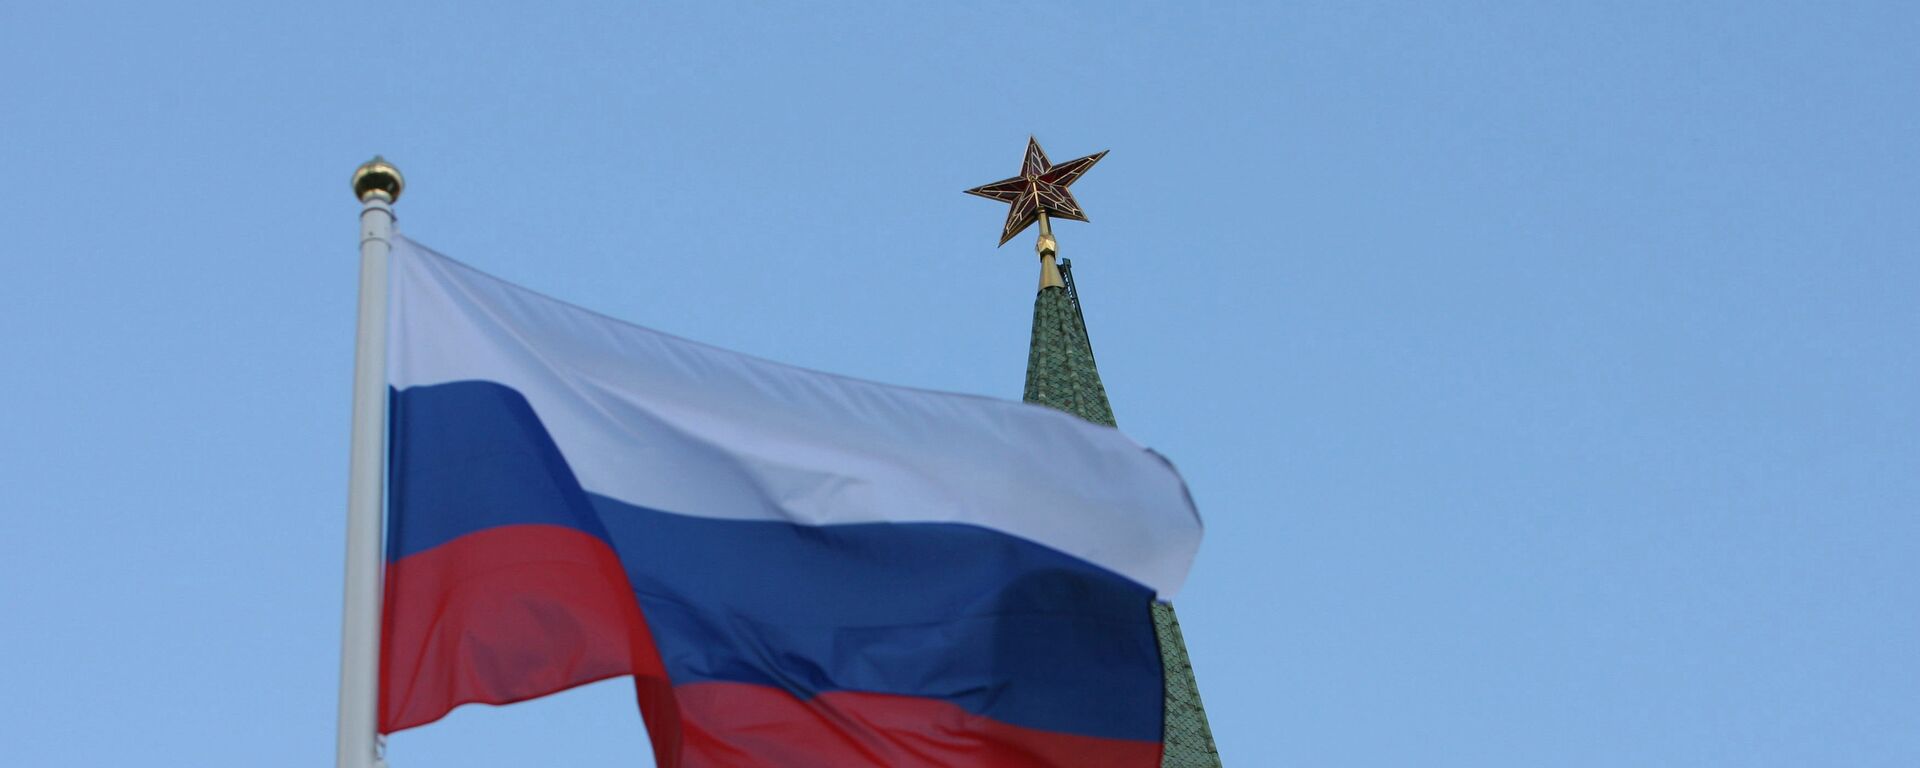 Российский флаг - Sputnik Ўзбекистон, 1920, 05.04.2018